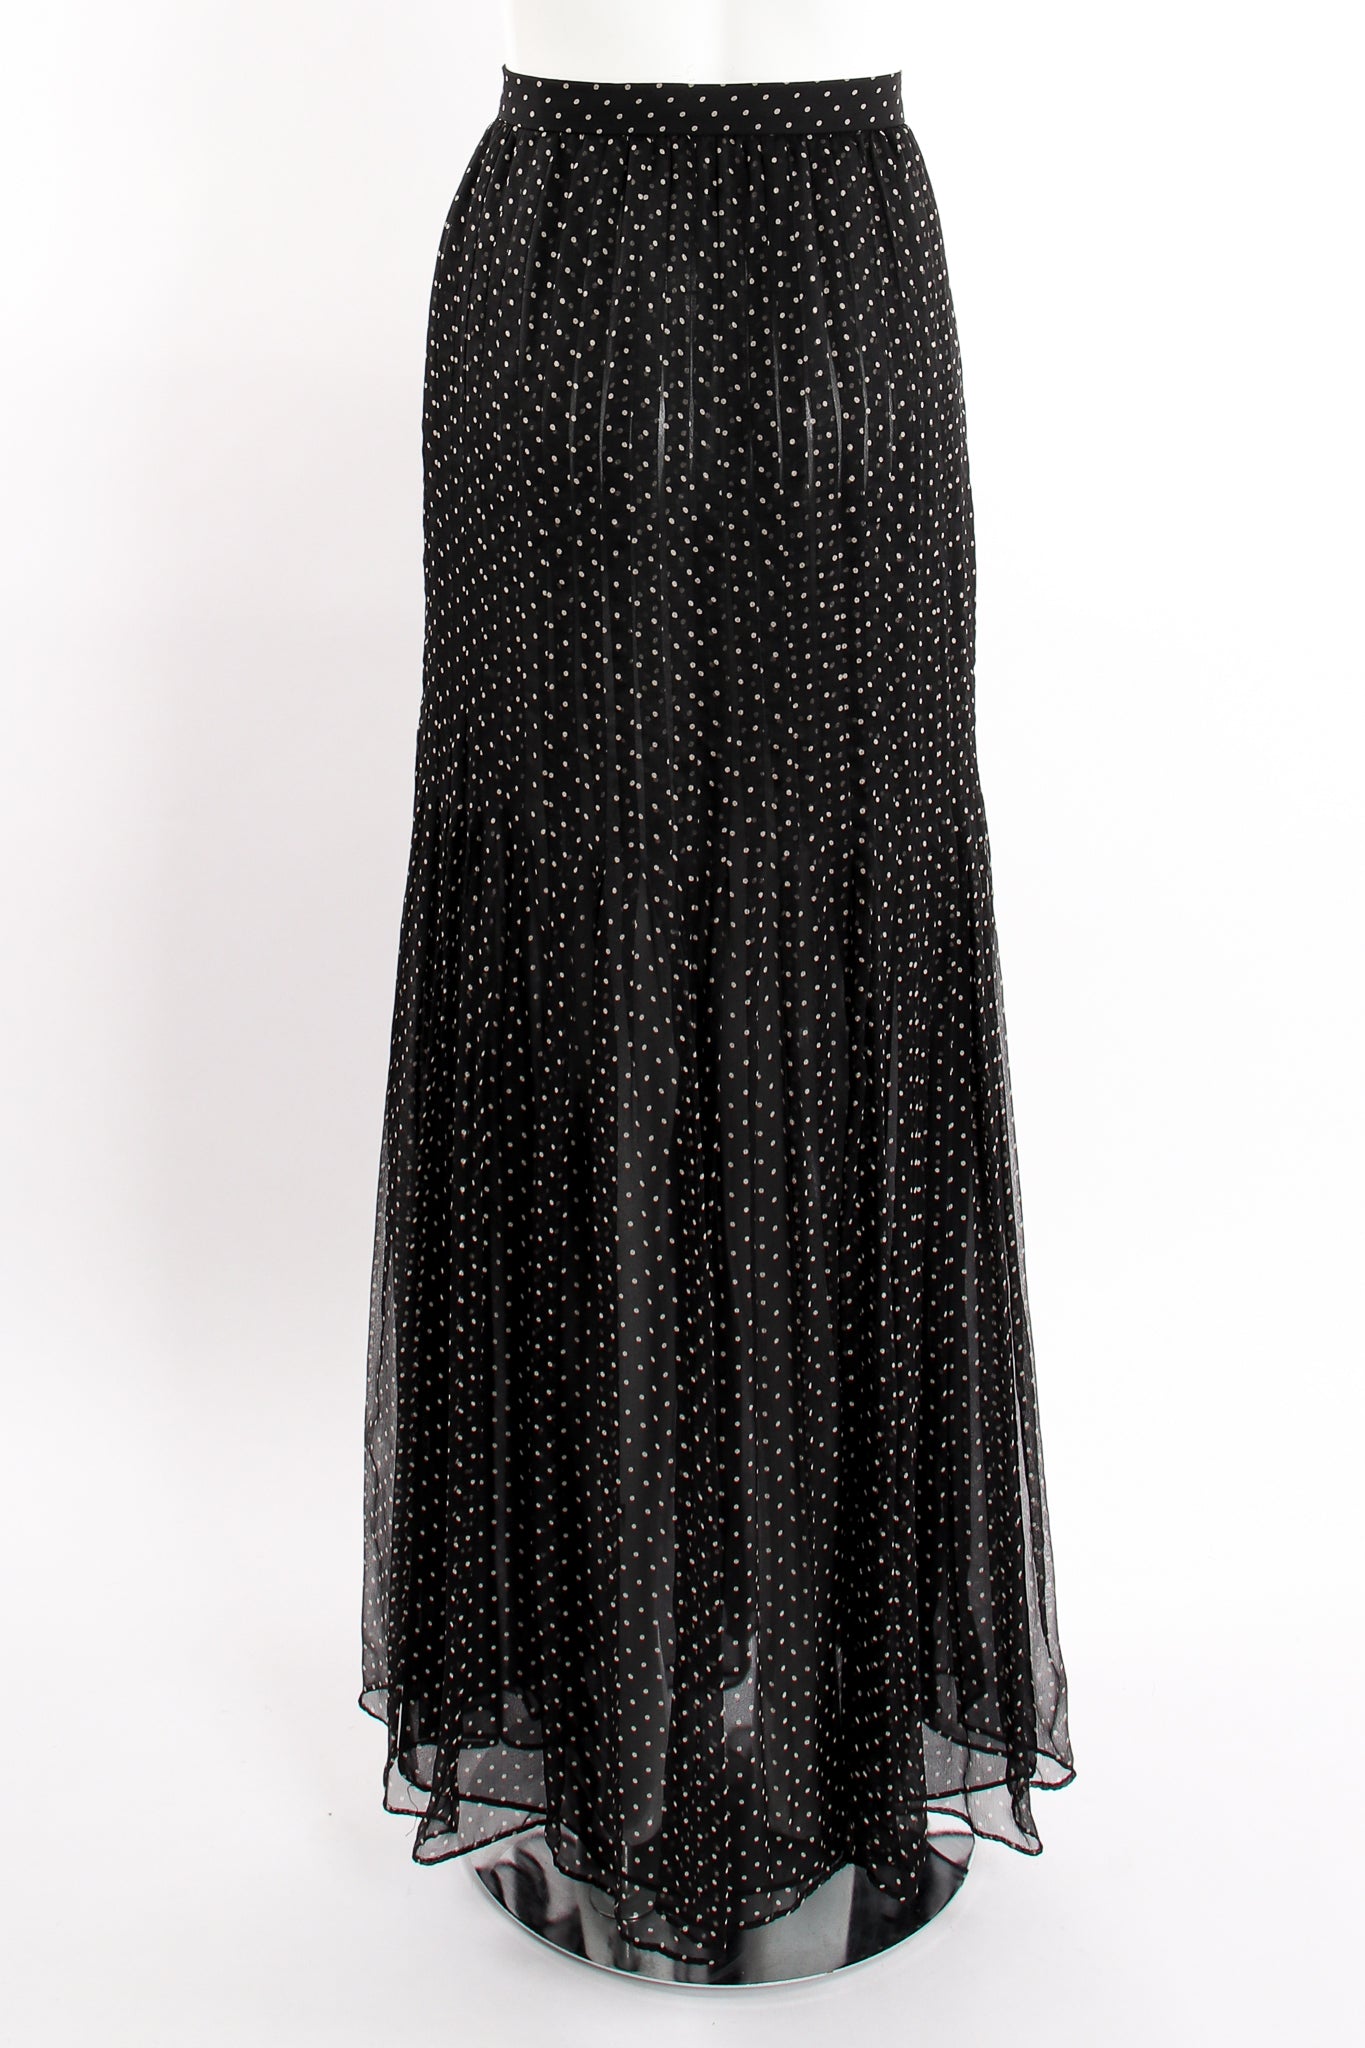 Vintage Oscar de la Renta Pleated Chiffon Dot Skirt on Mannequin back at Recess Los Angeles